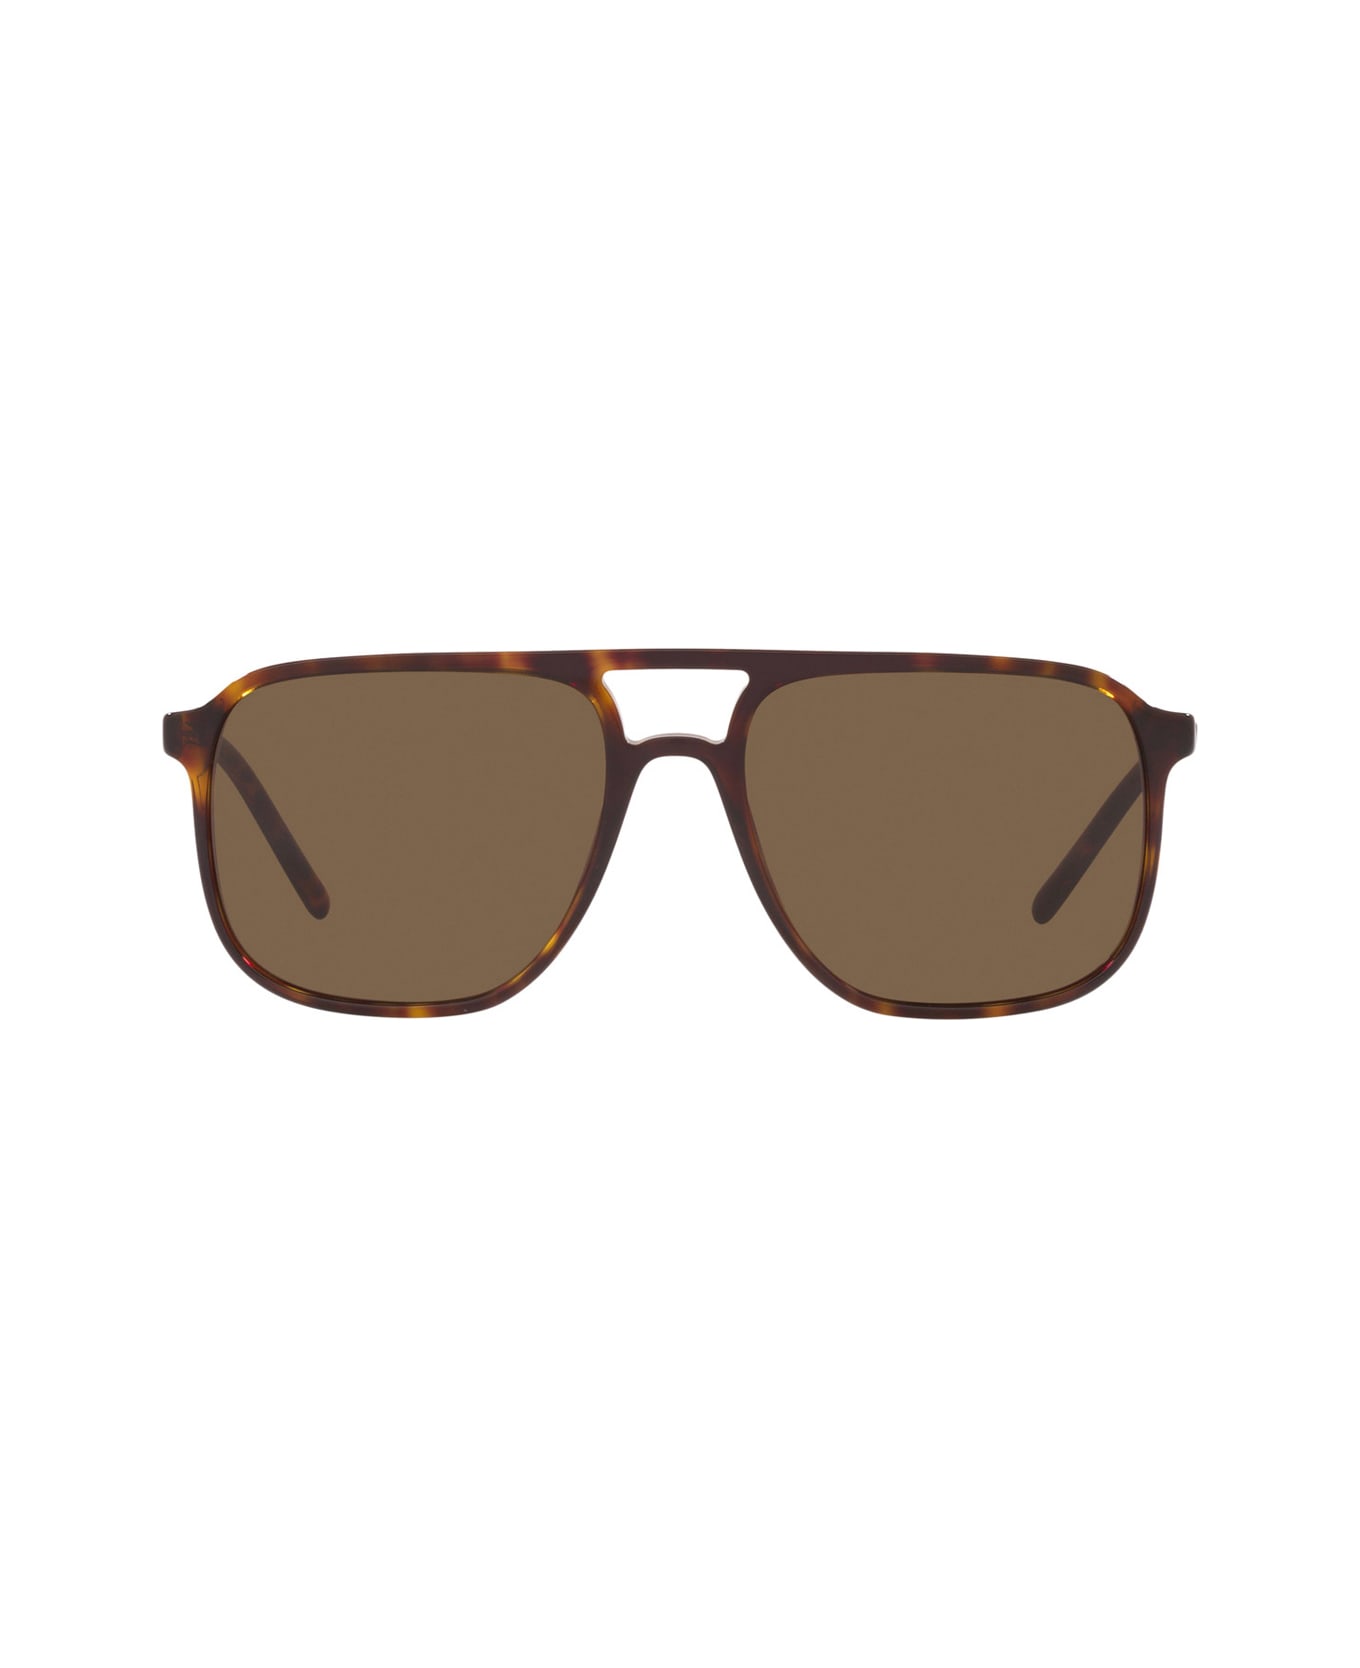 valentino vlogo acetate cat eye Beach sunglasses Eyewear Dg4423 502/73 Beach Sunglasses - Marrone